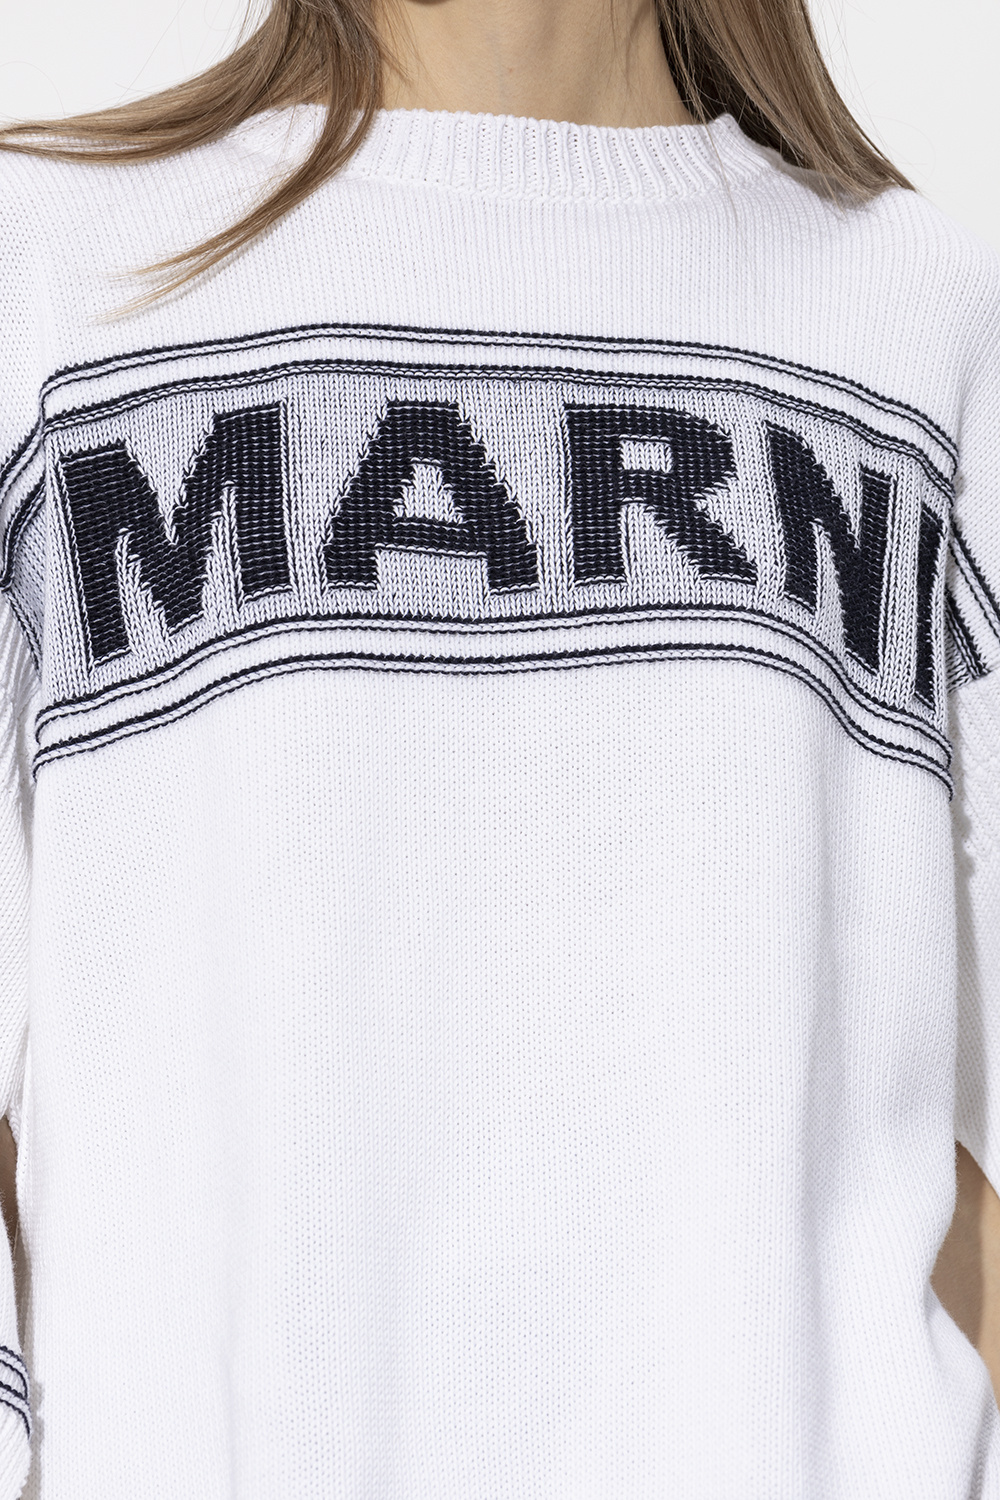 Marni marni cropped flared trousers item